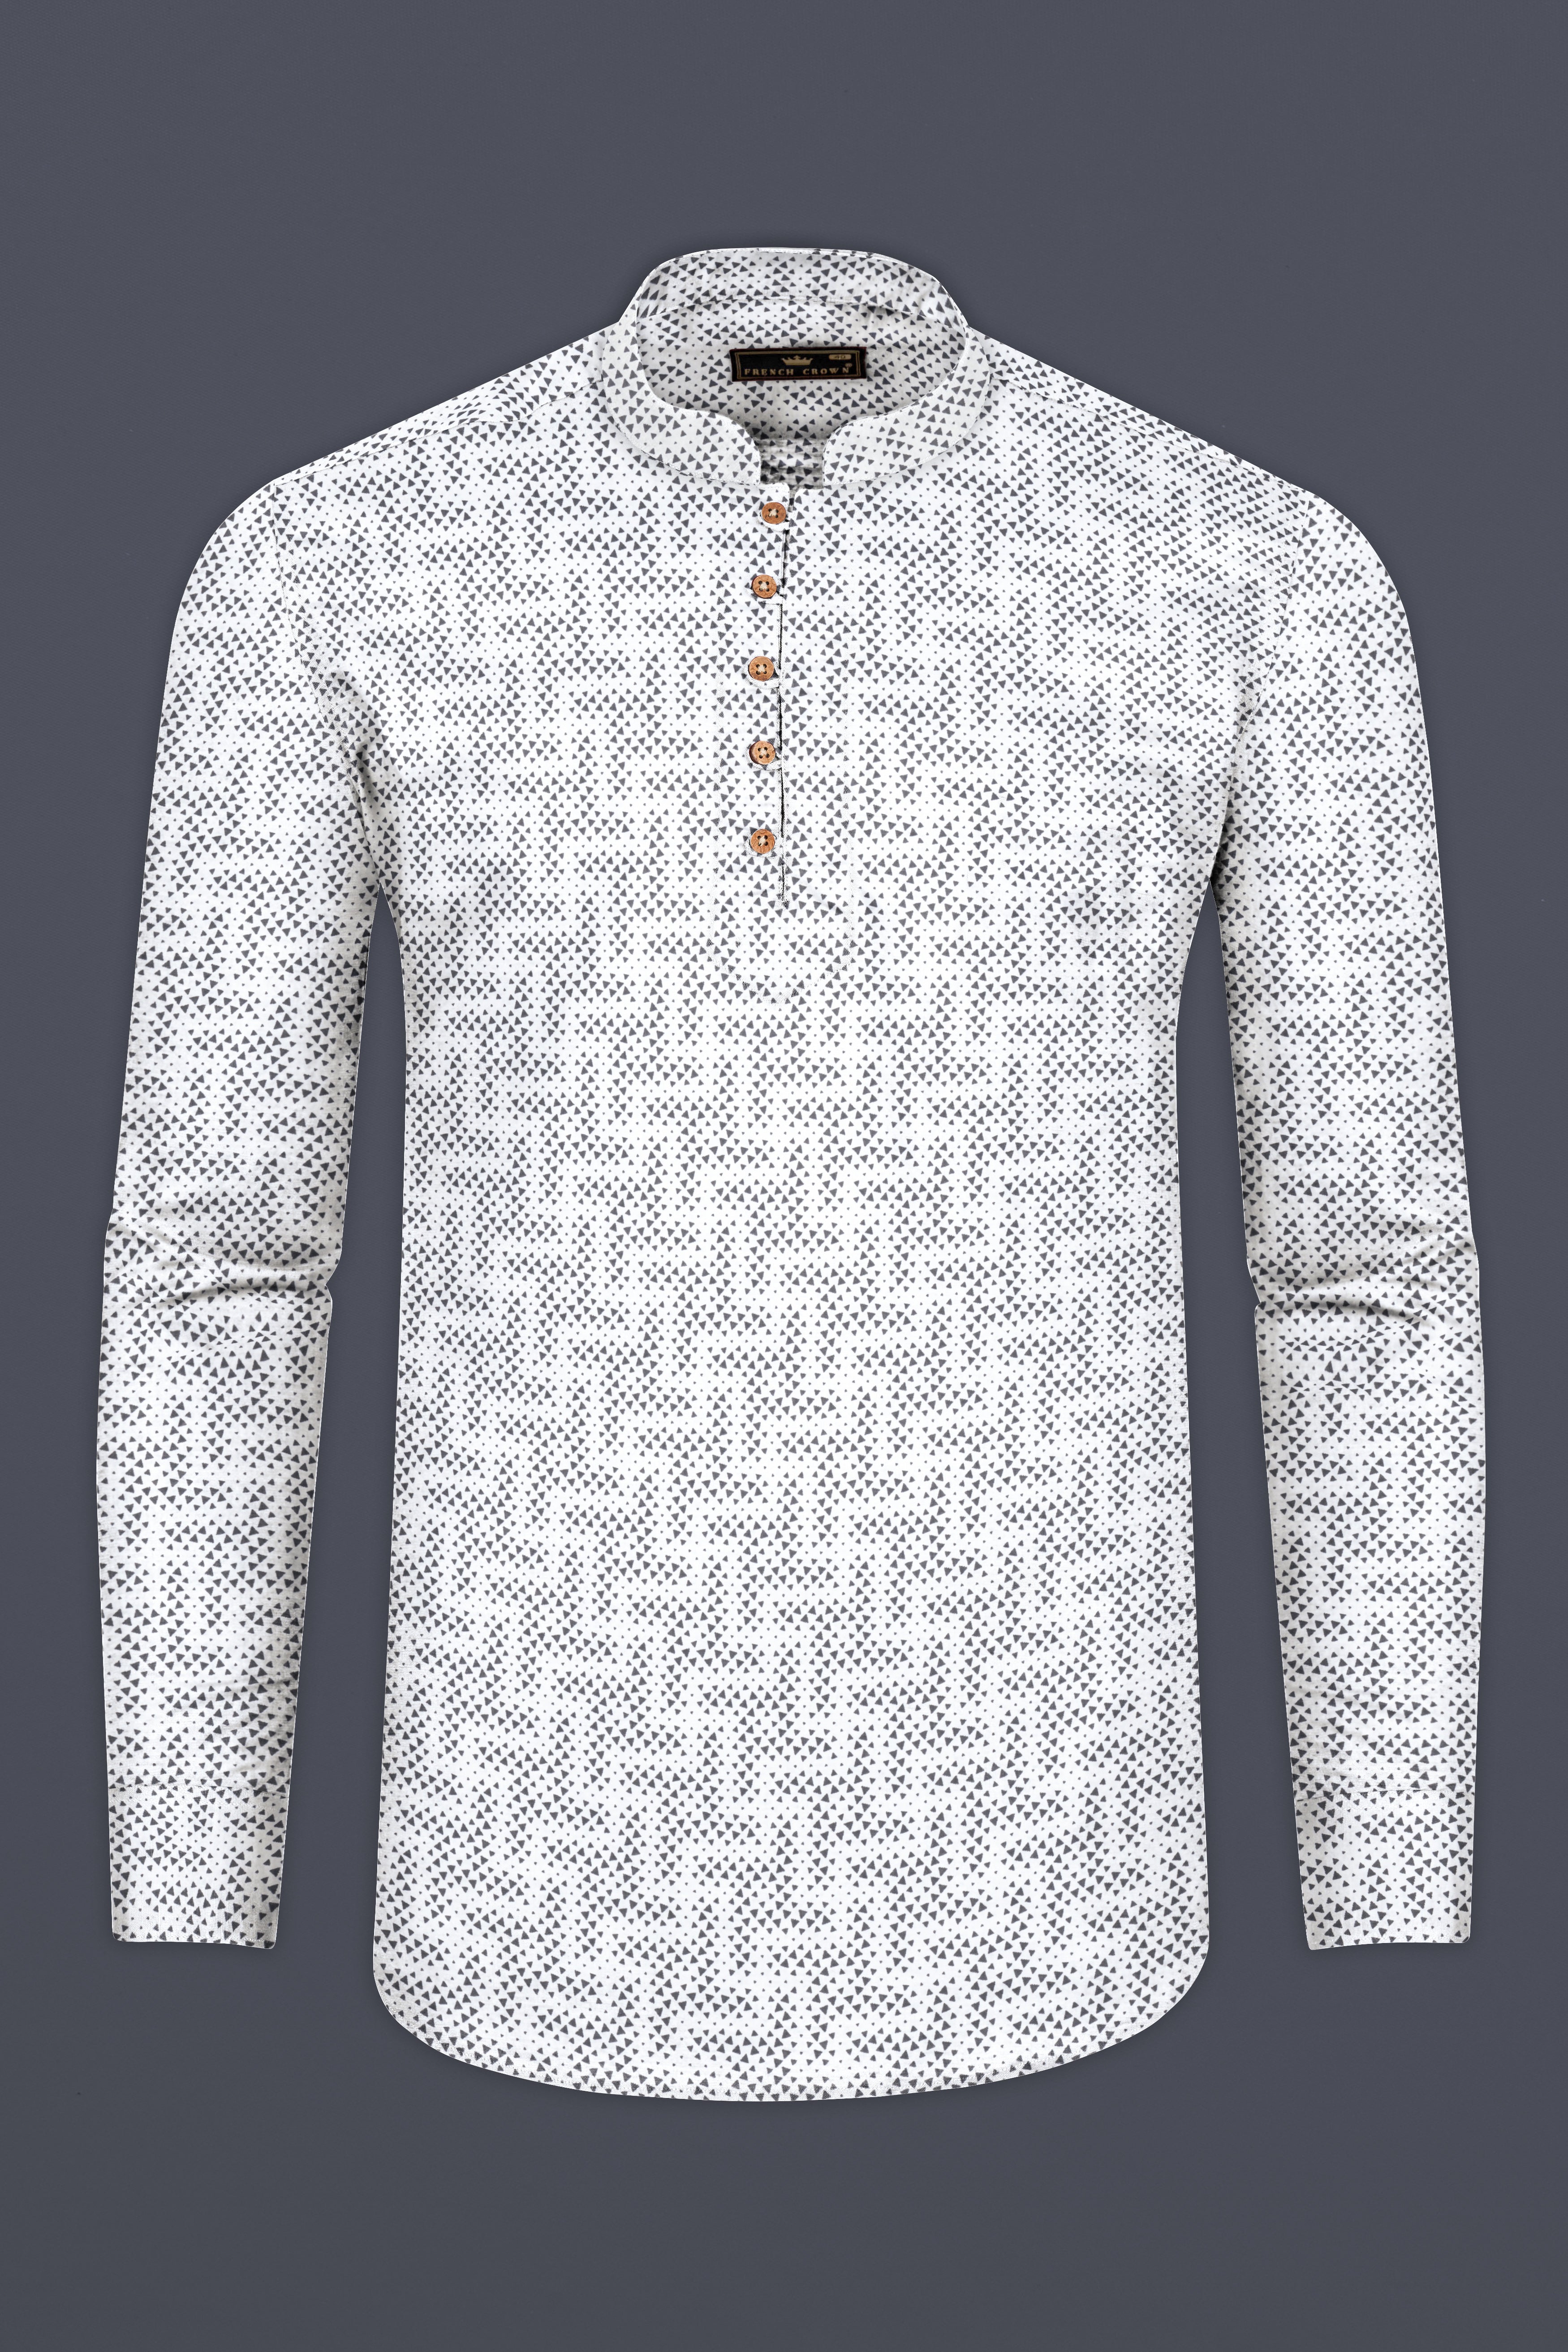 Bright White with Black Triangles Printed Super Soft Premium Cotton Kurta Shirt